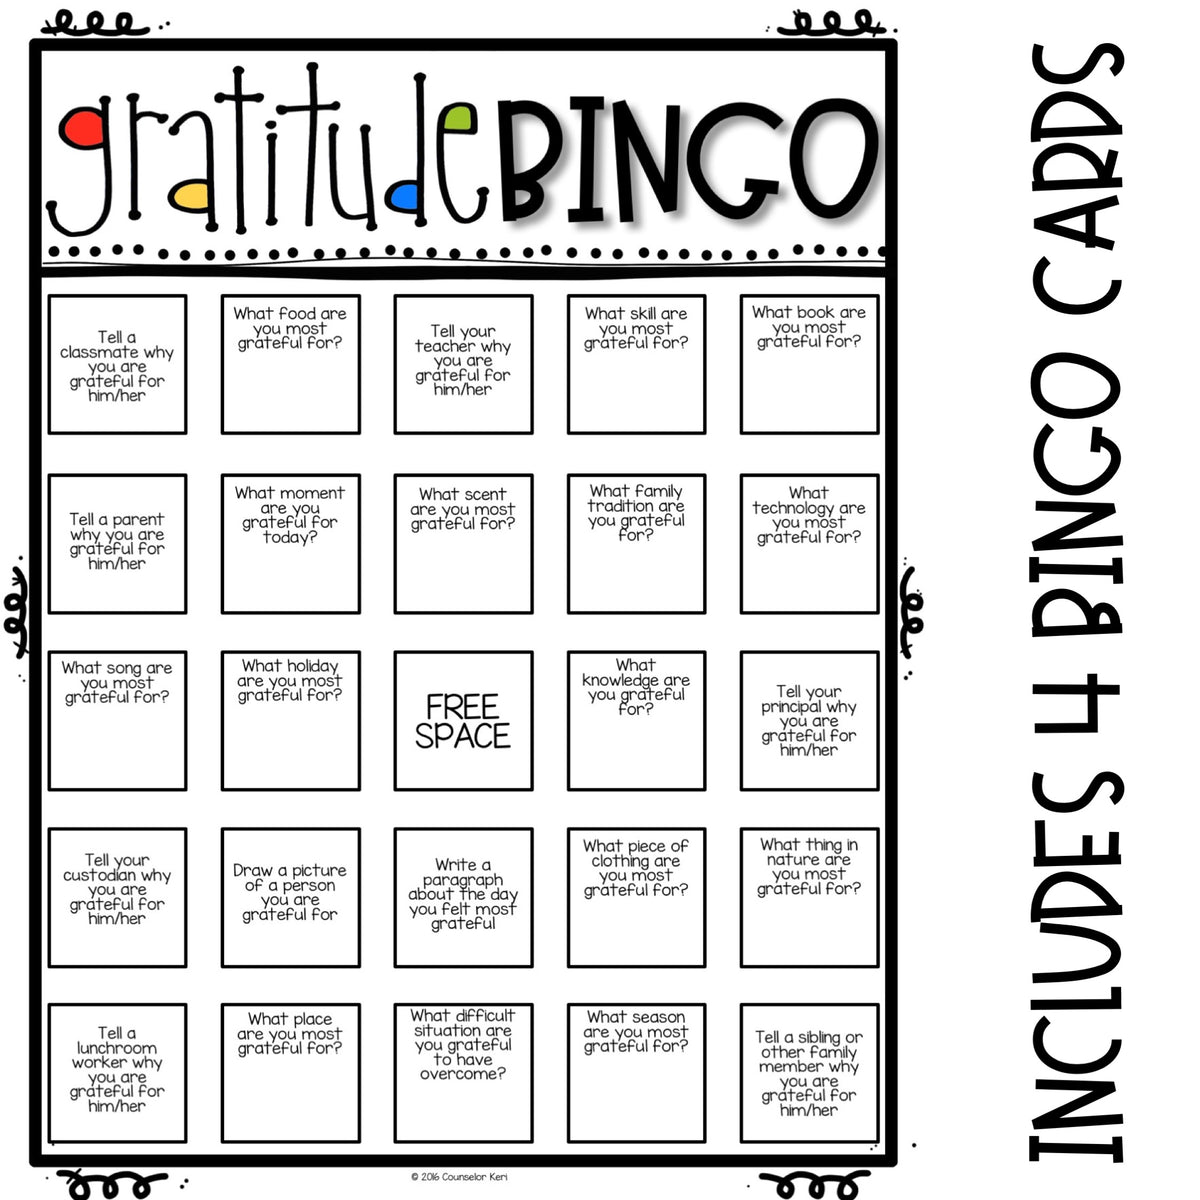 gratitude-bingo-challenge-elementary-school-counseling-thanksgiving-ac